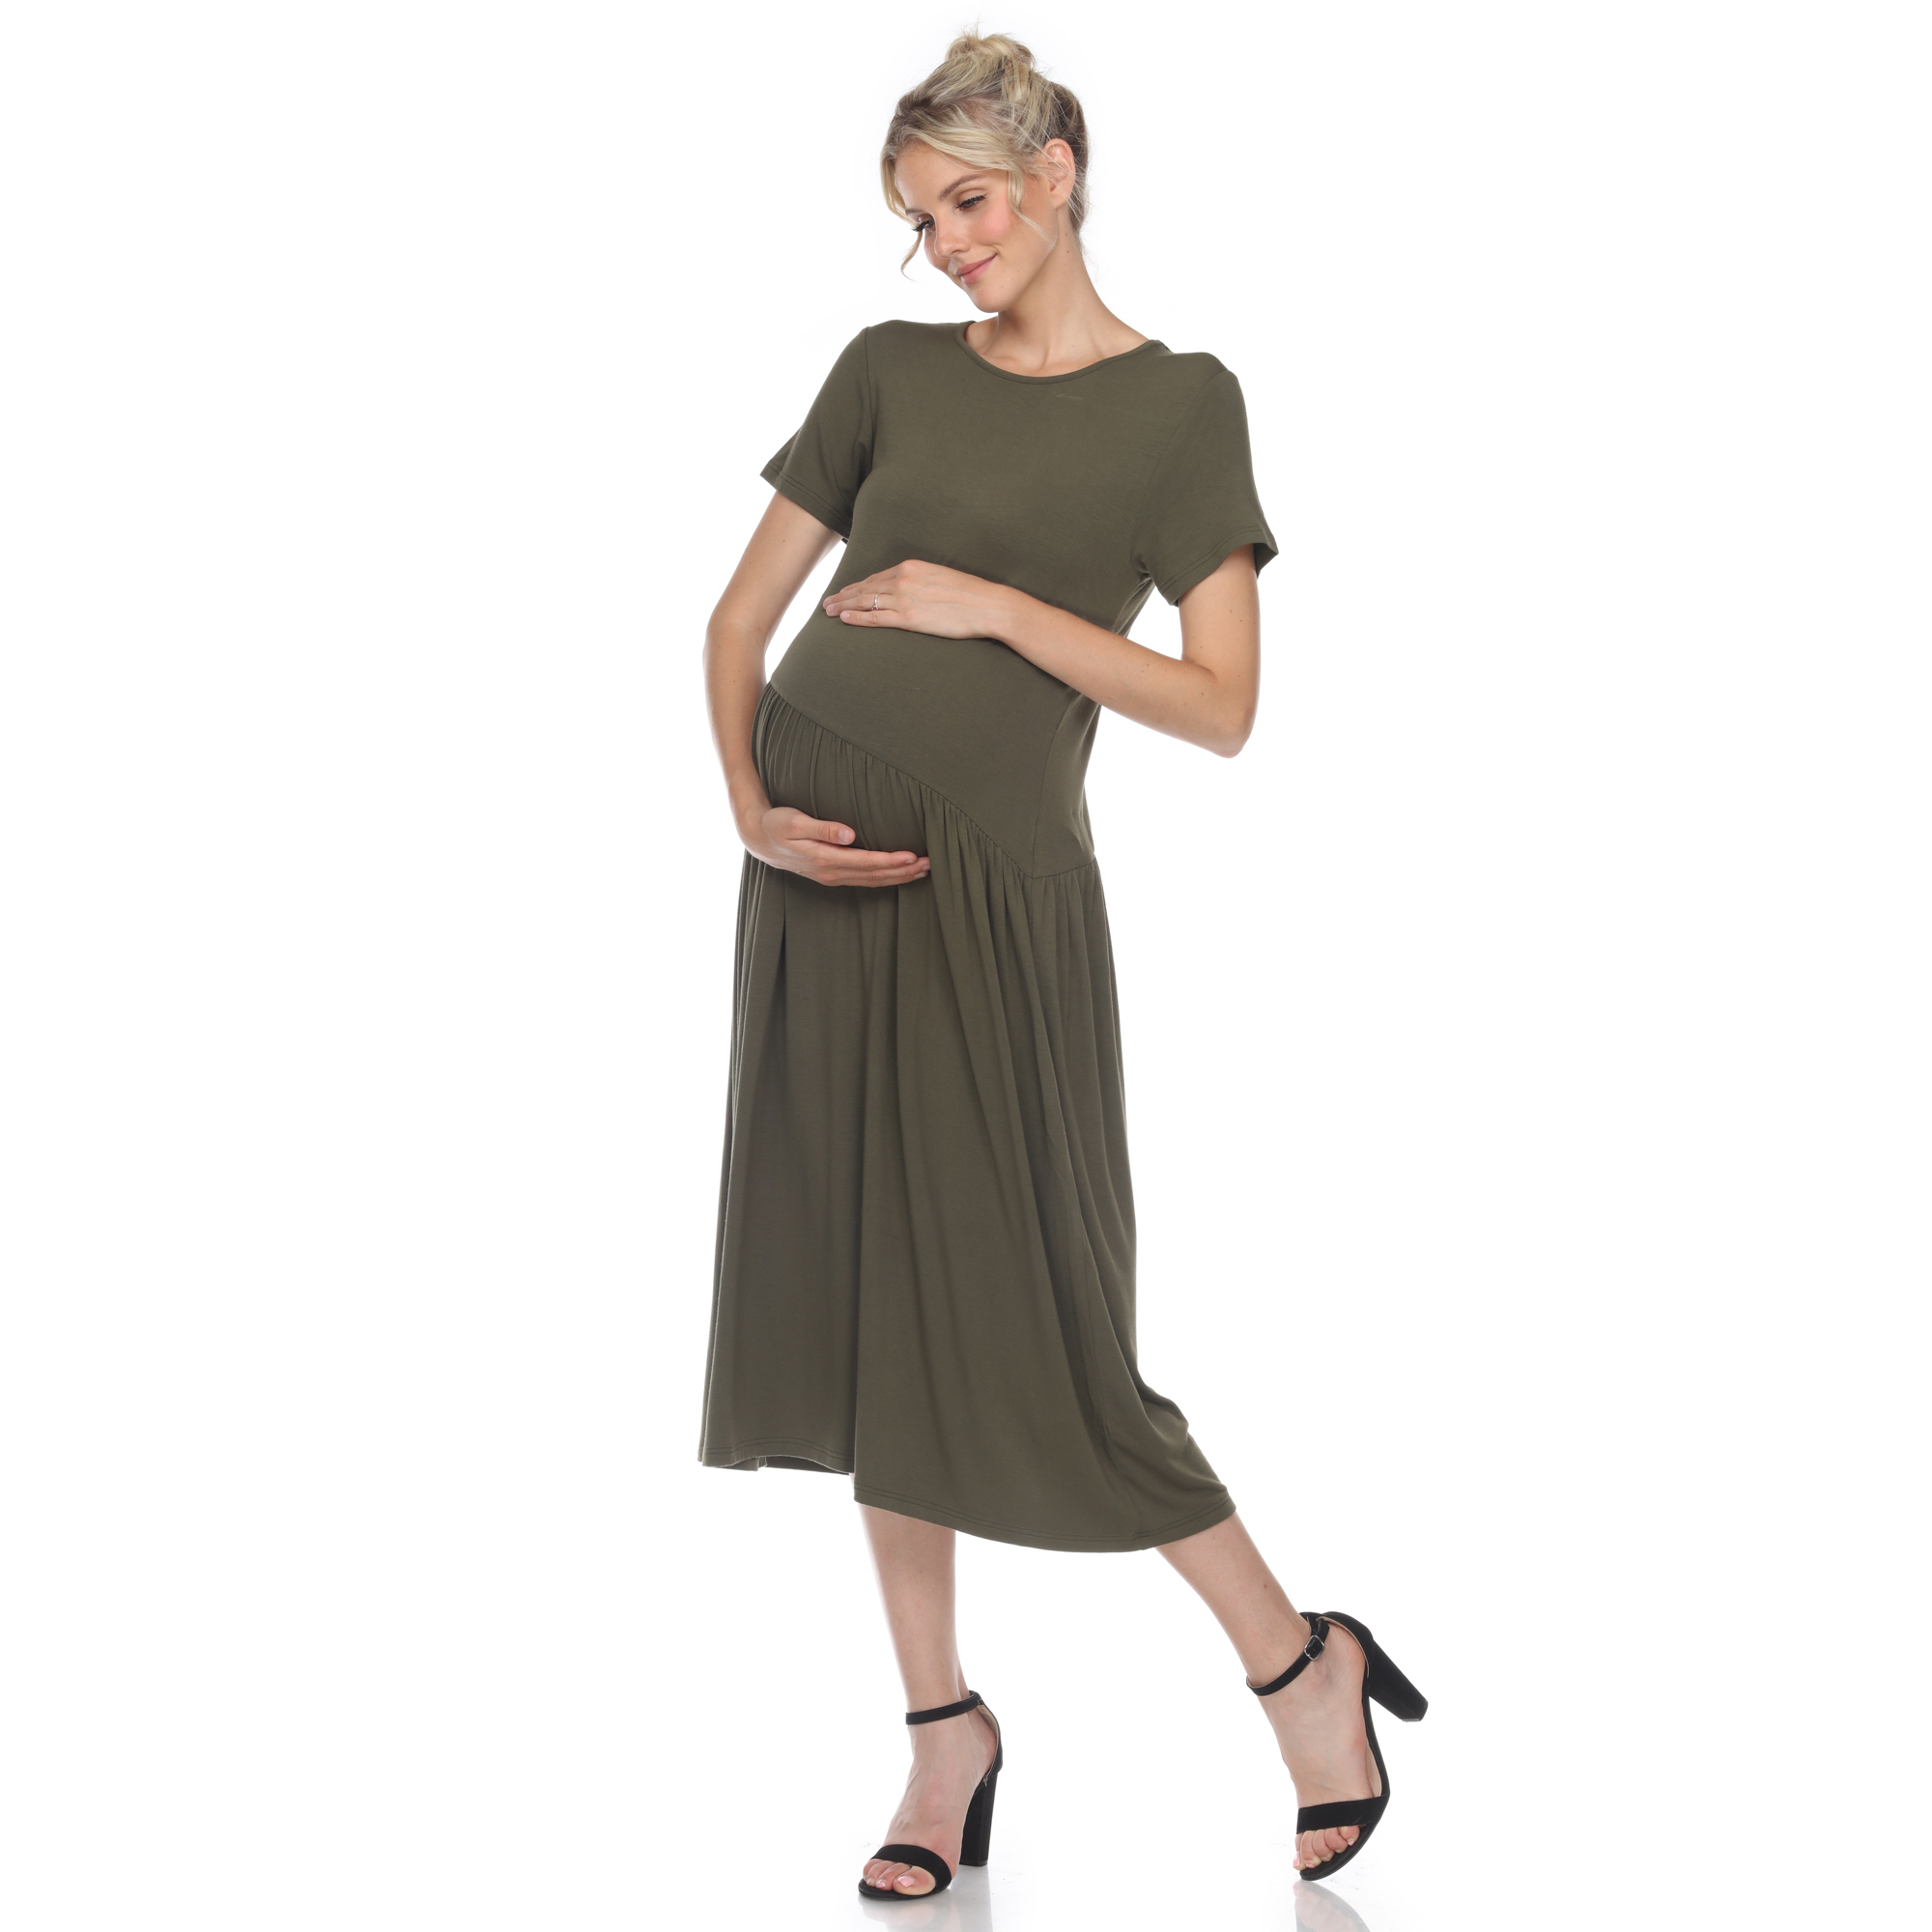 White Mark Womenâs Maternity Short Sleeve Maxi Dress - Olive, Large